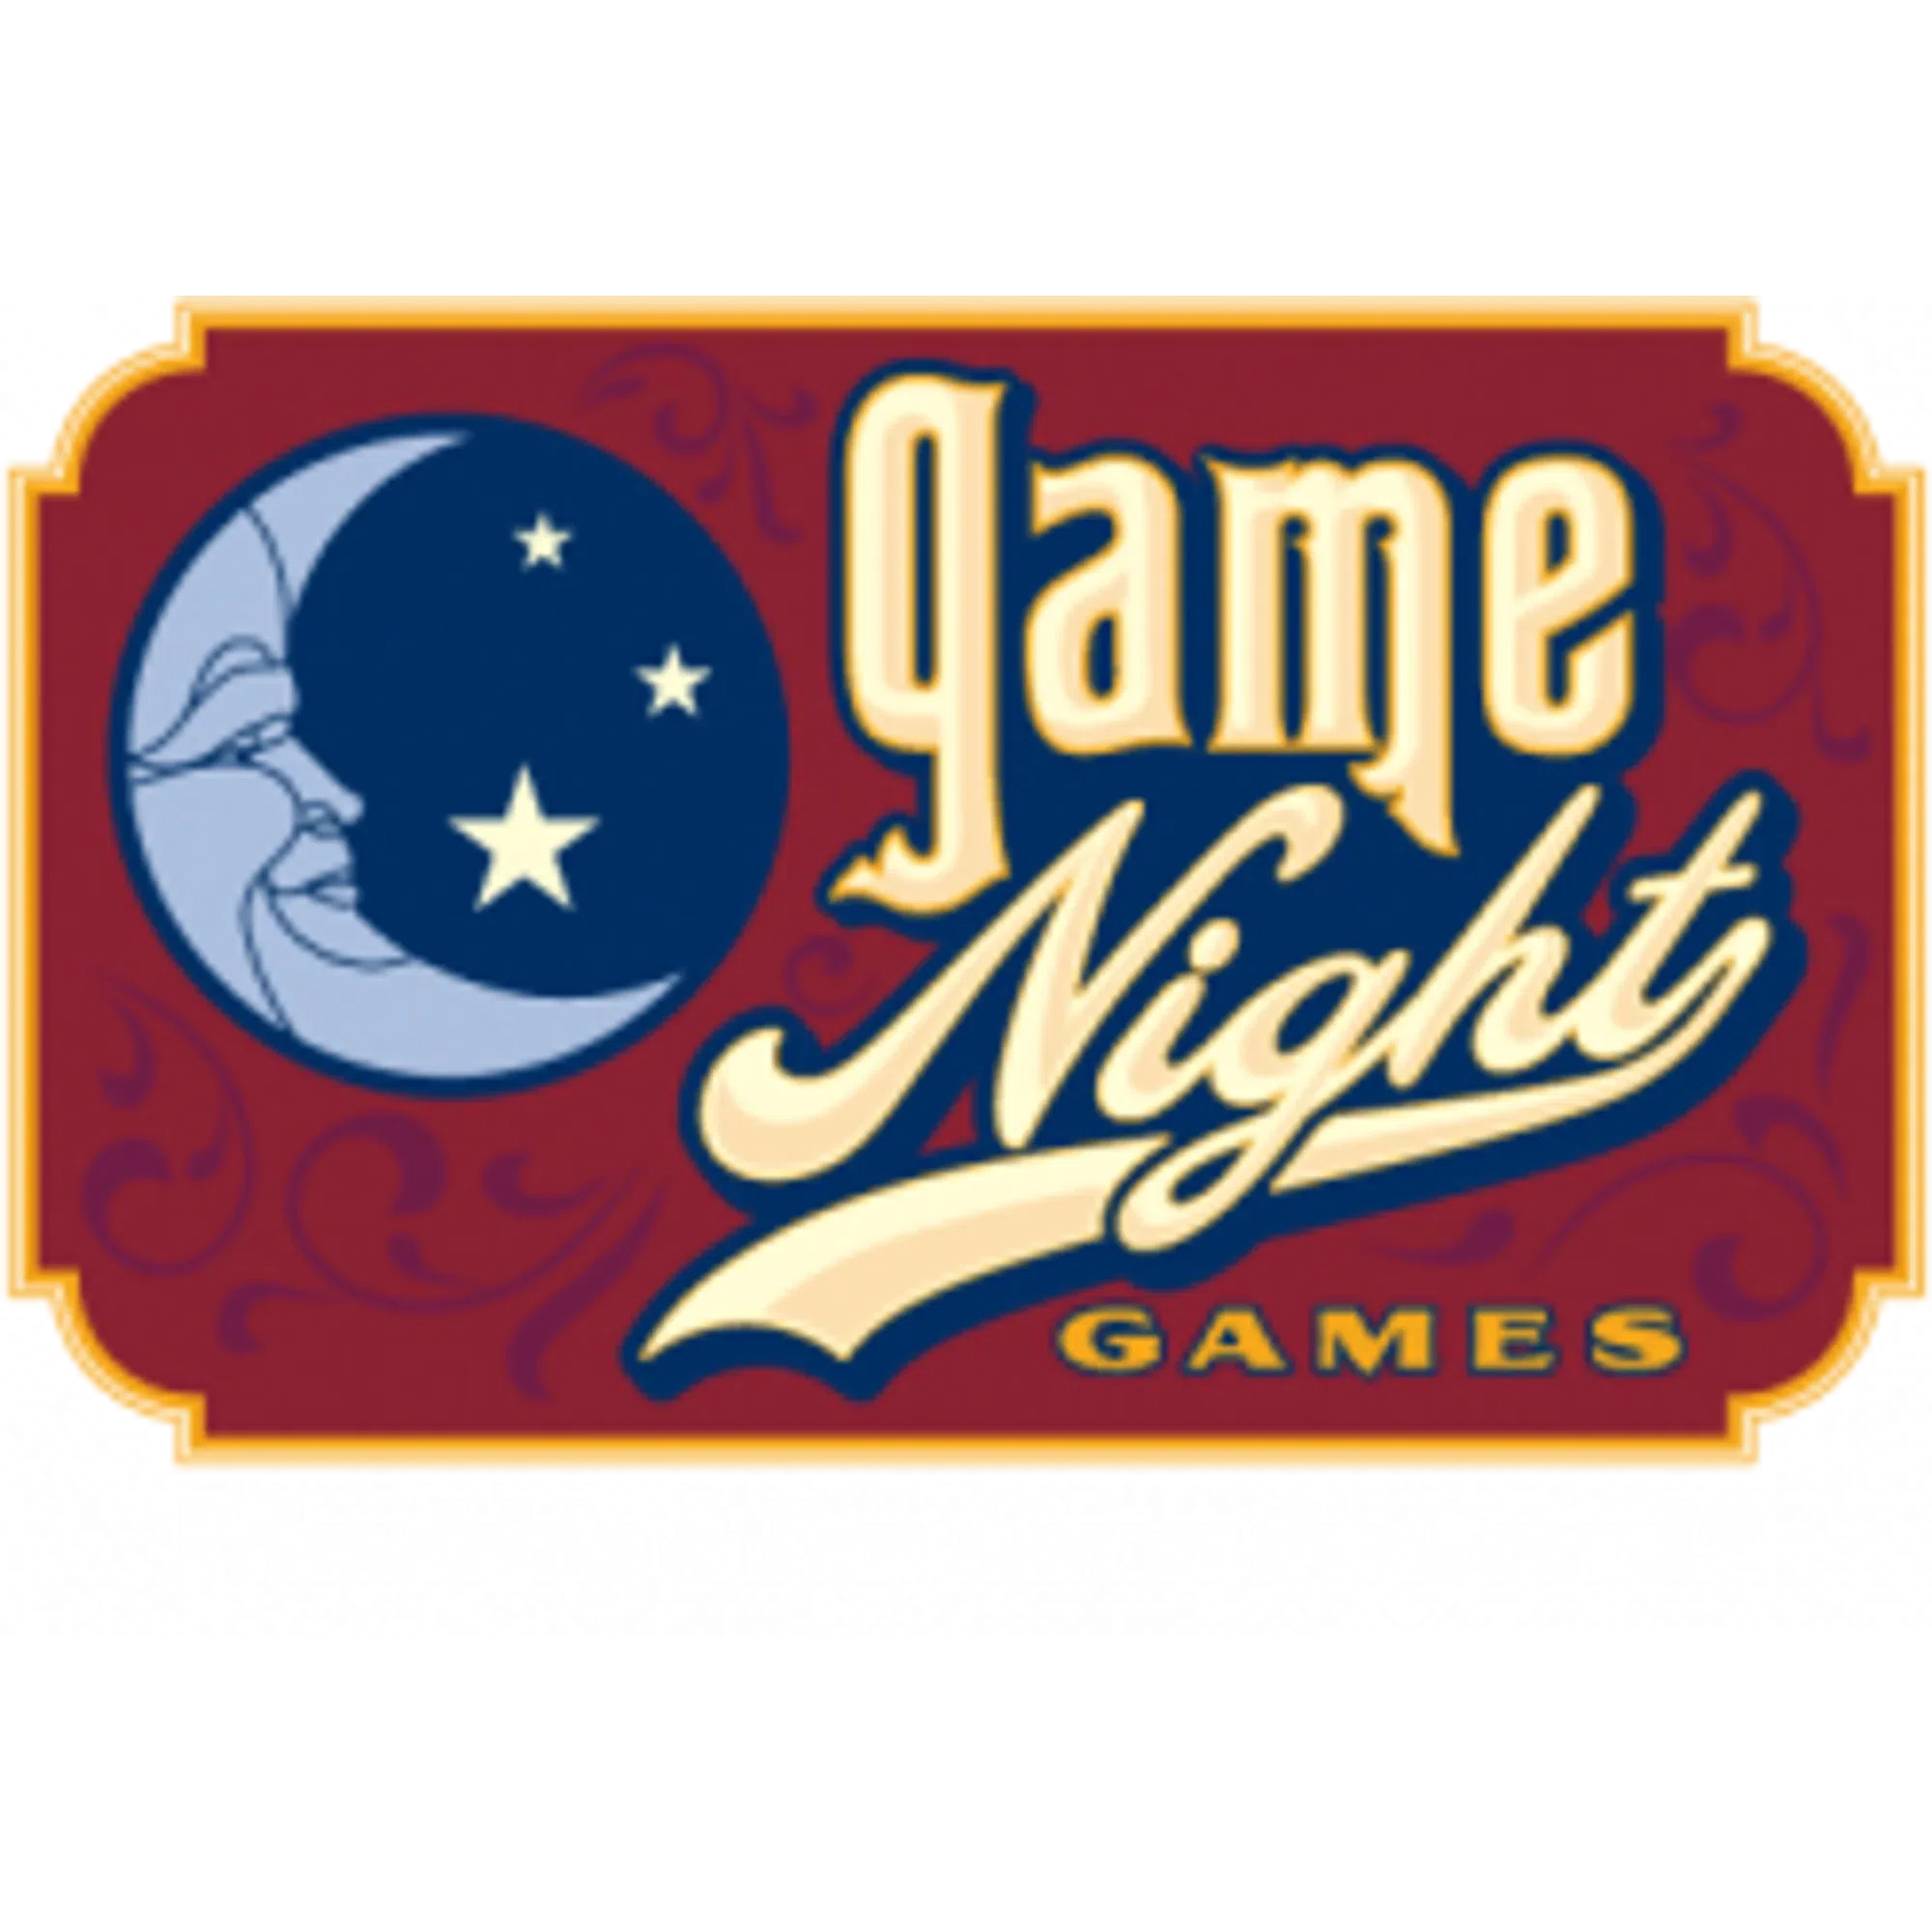 gamenightgames.com logo